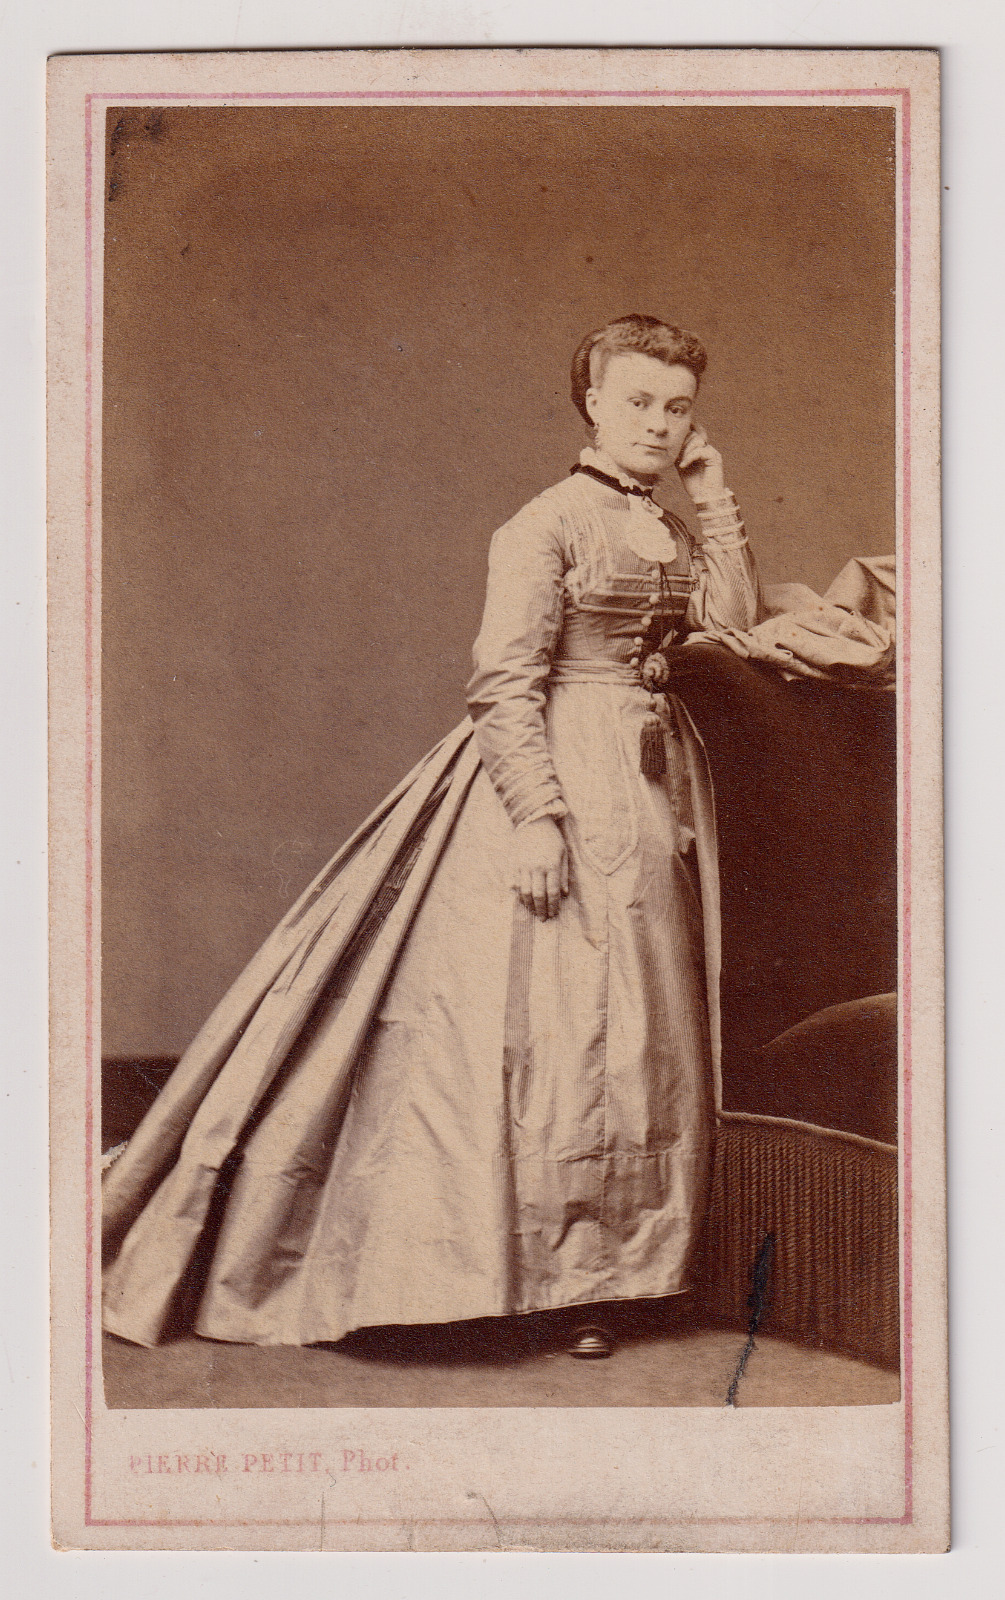 Pierre Petit CDV in Paris - Une dame pose - vintage albumen print c.1869/70